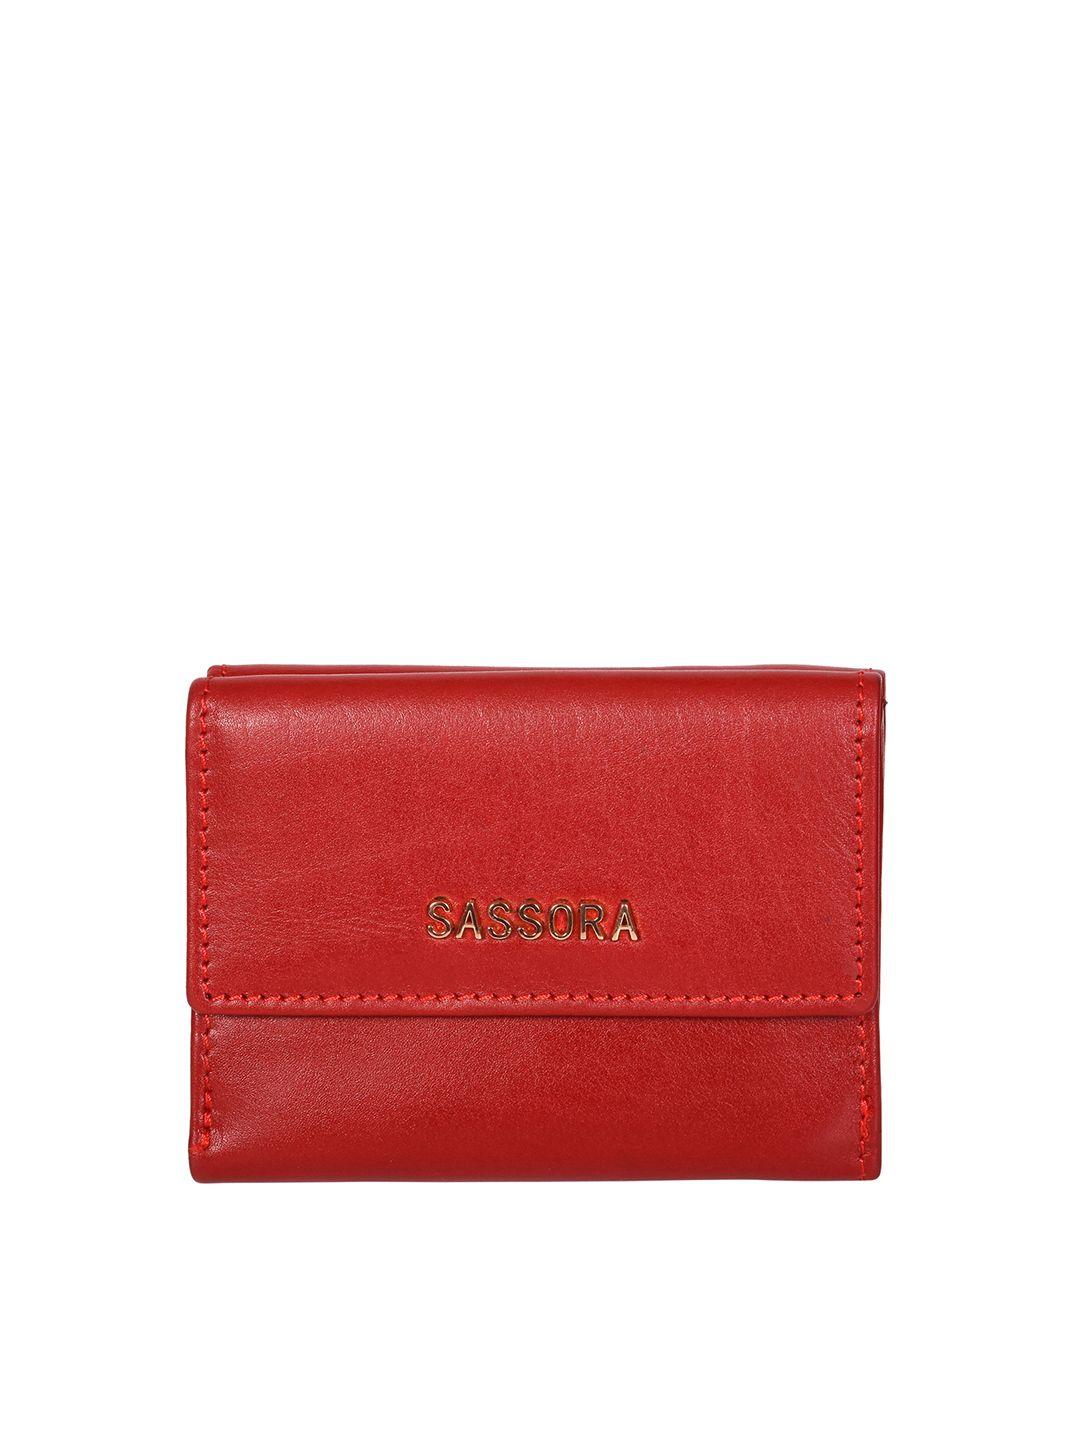 sassora women red leather three fold wallet